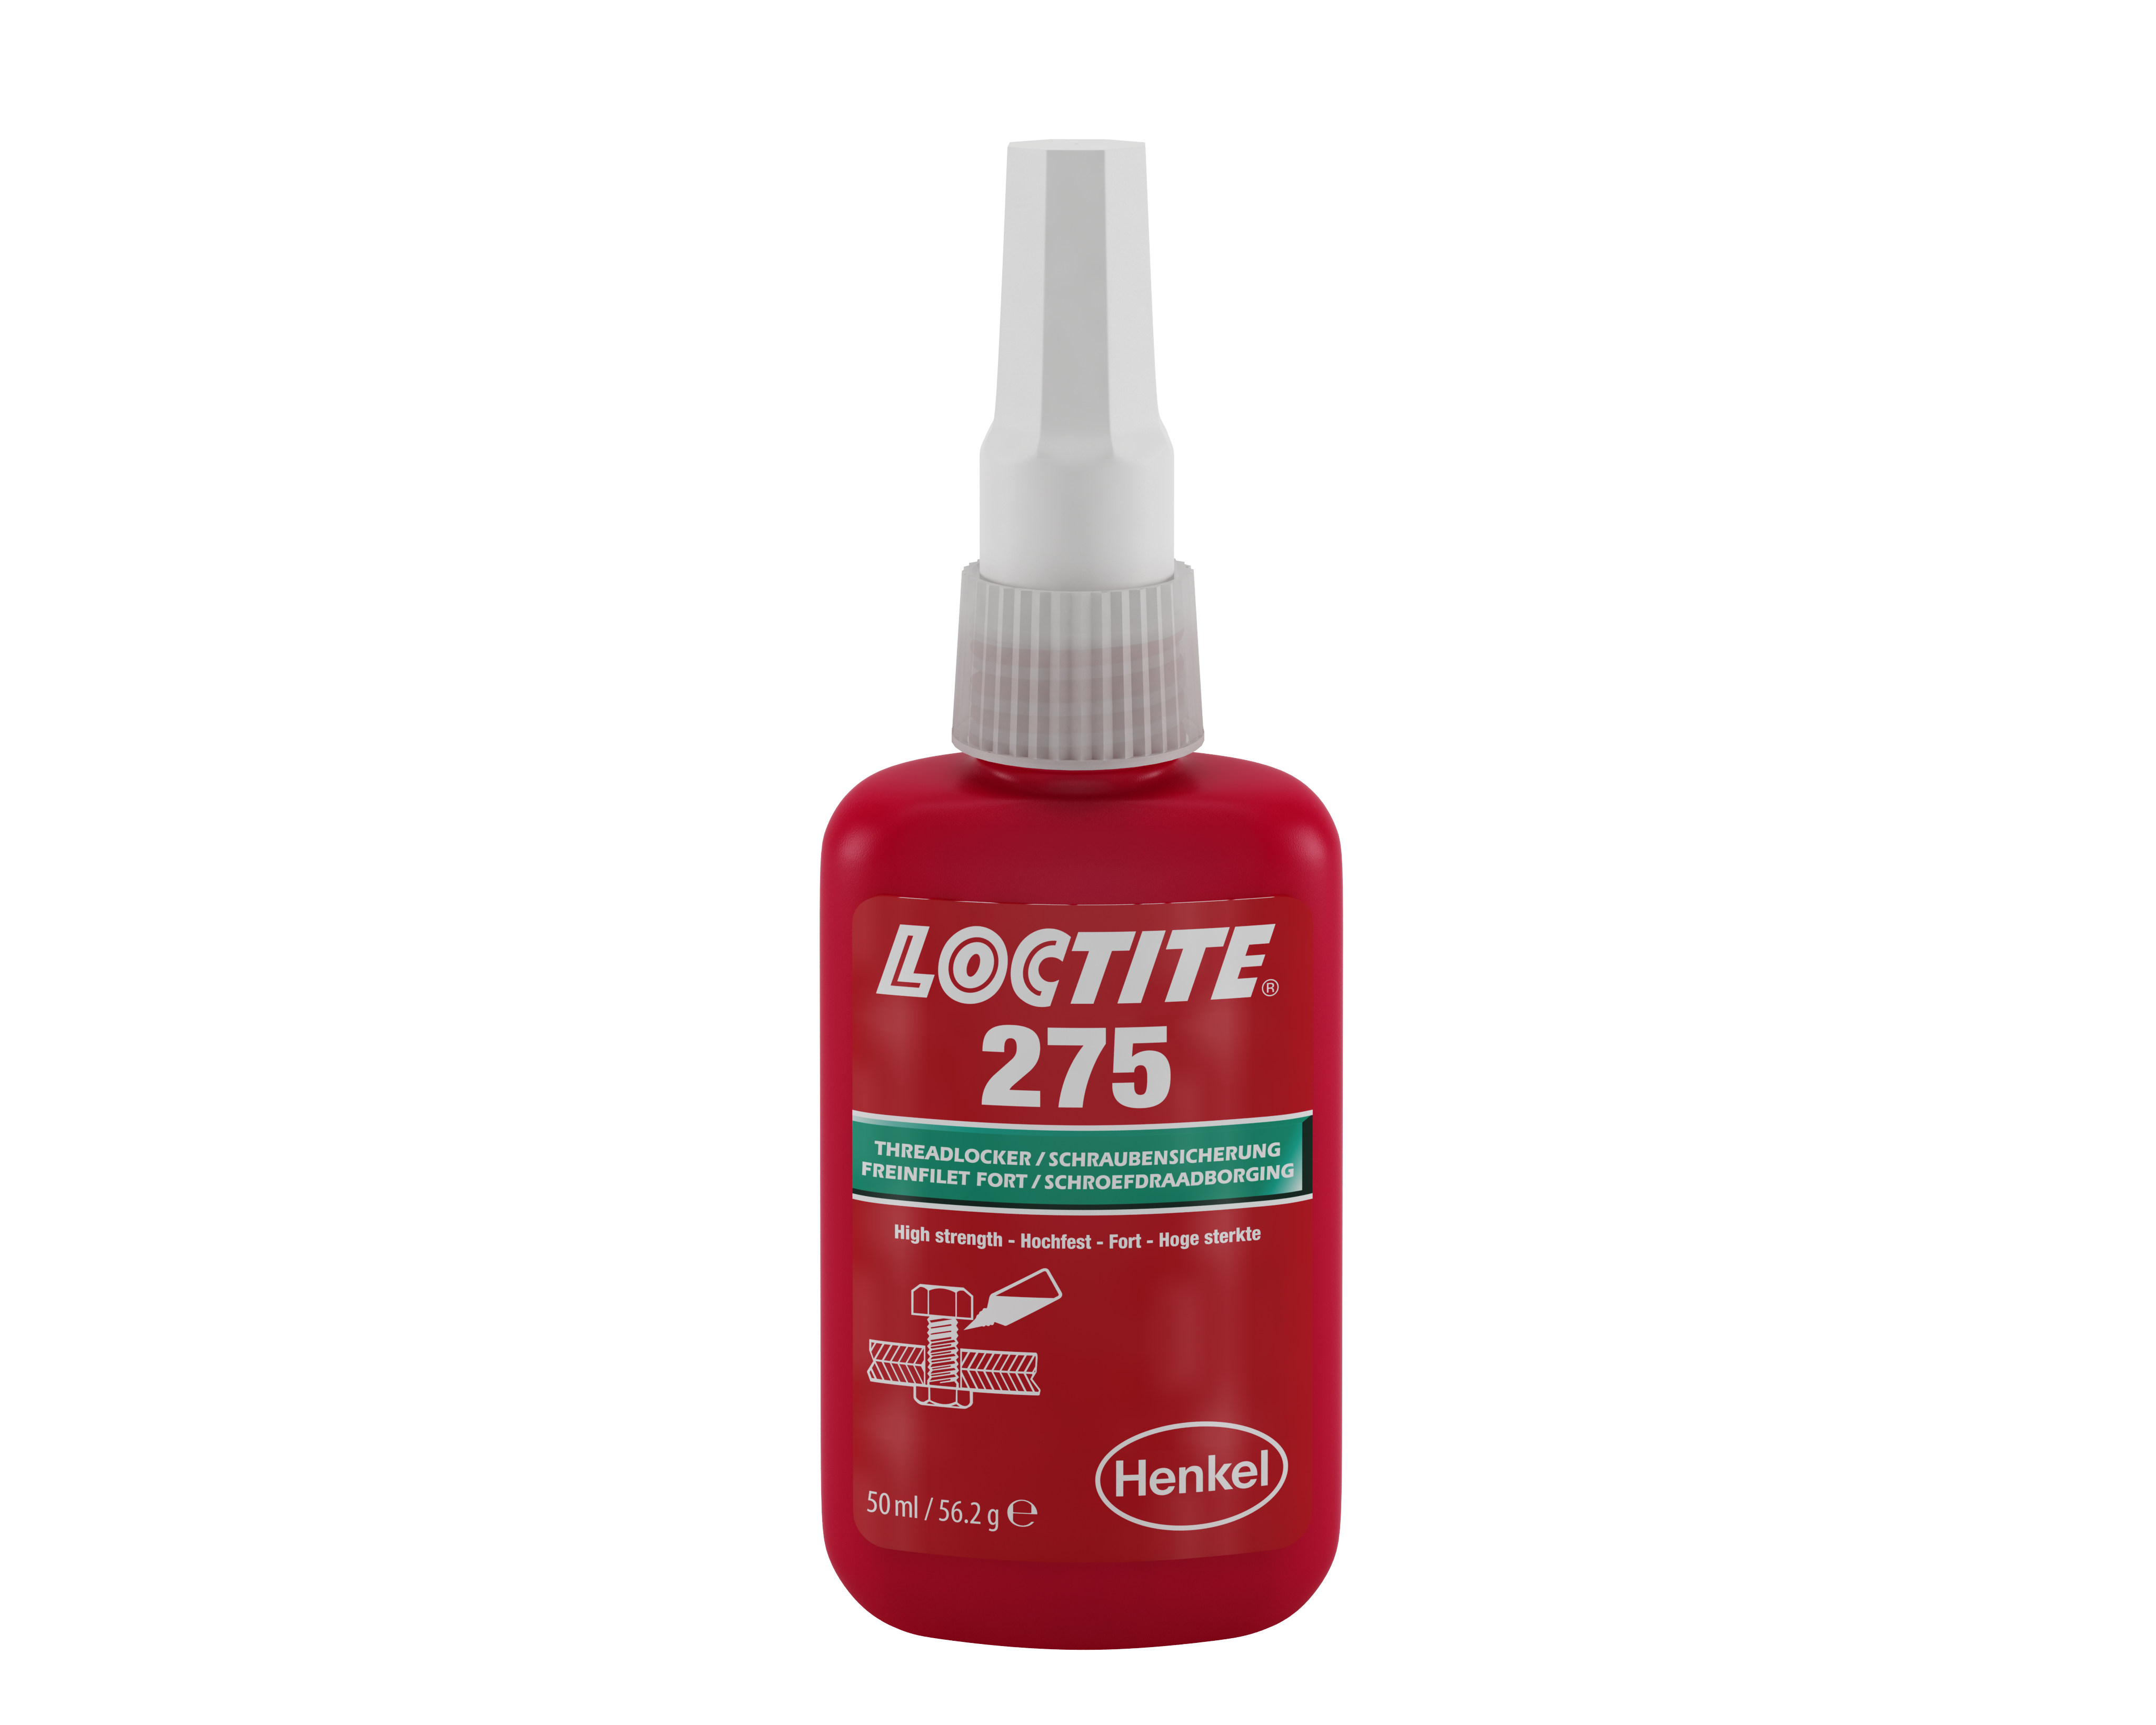 Loctite 275 x 50ml High Strength Threadlocking Adhesive